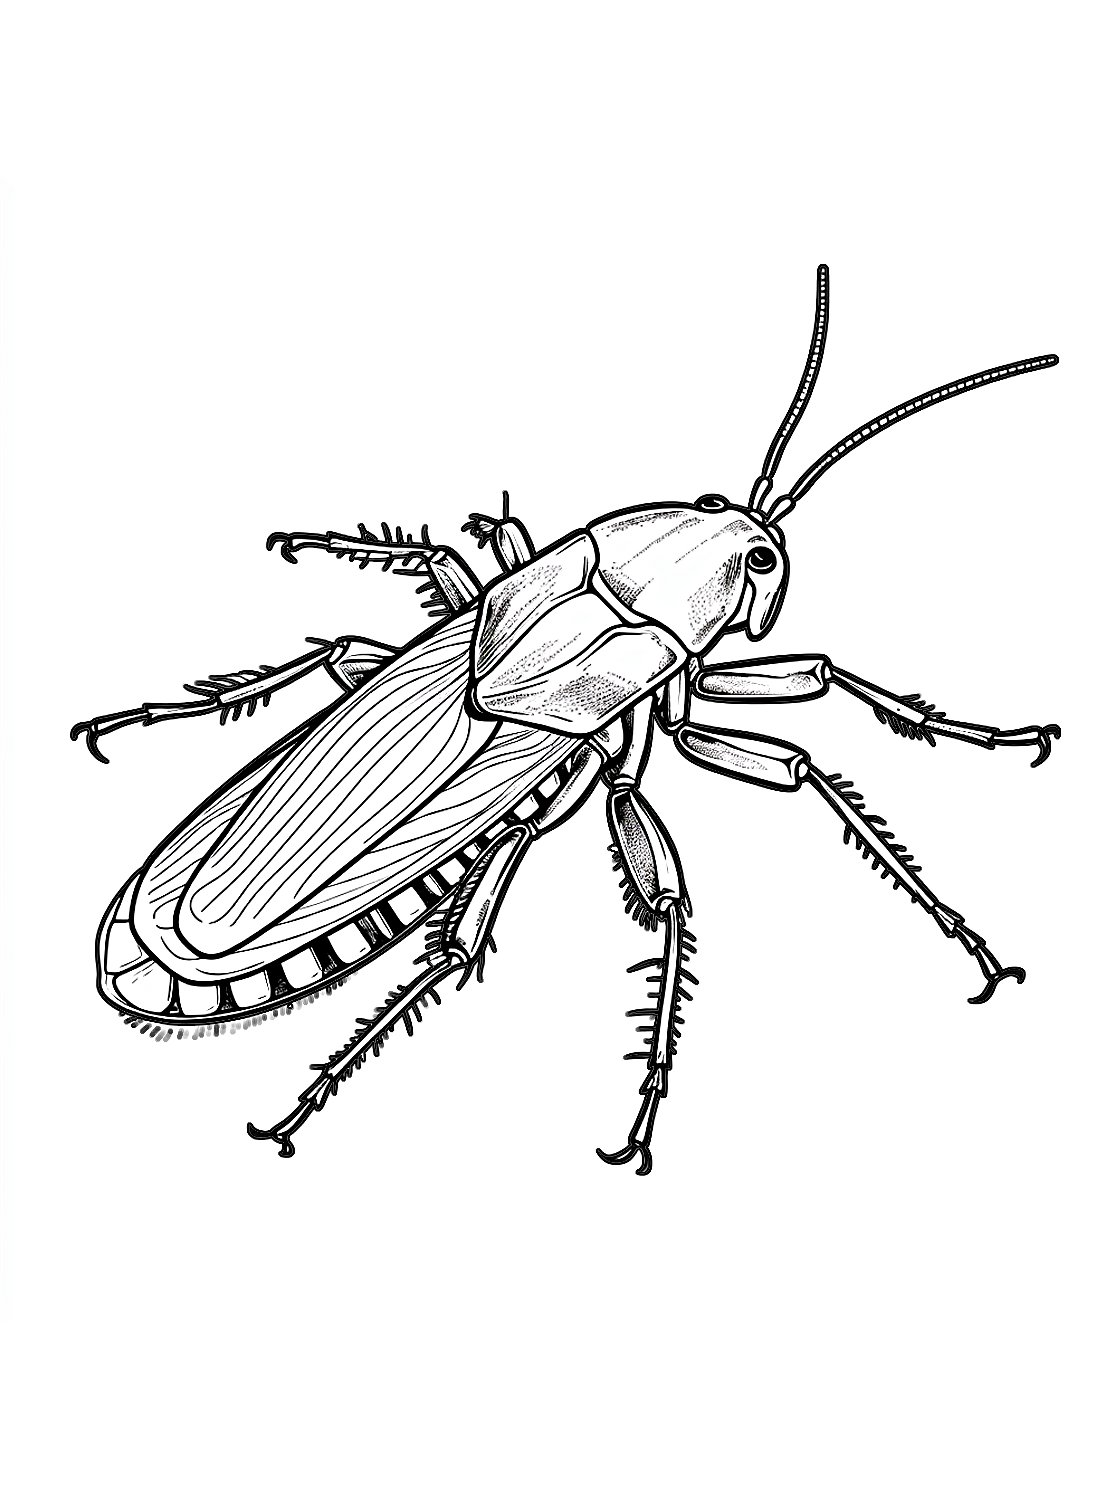 Una simple cucaracha de Cucaracha.